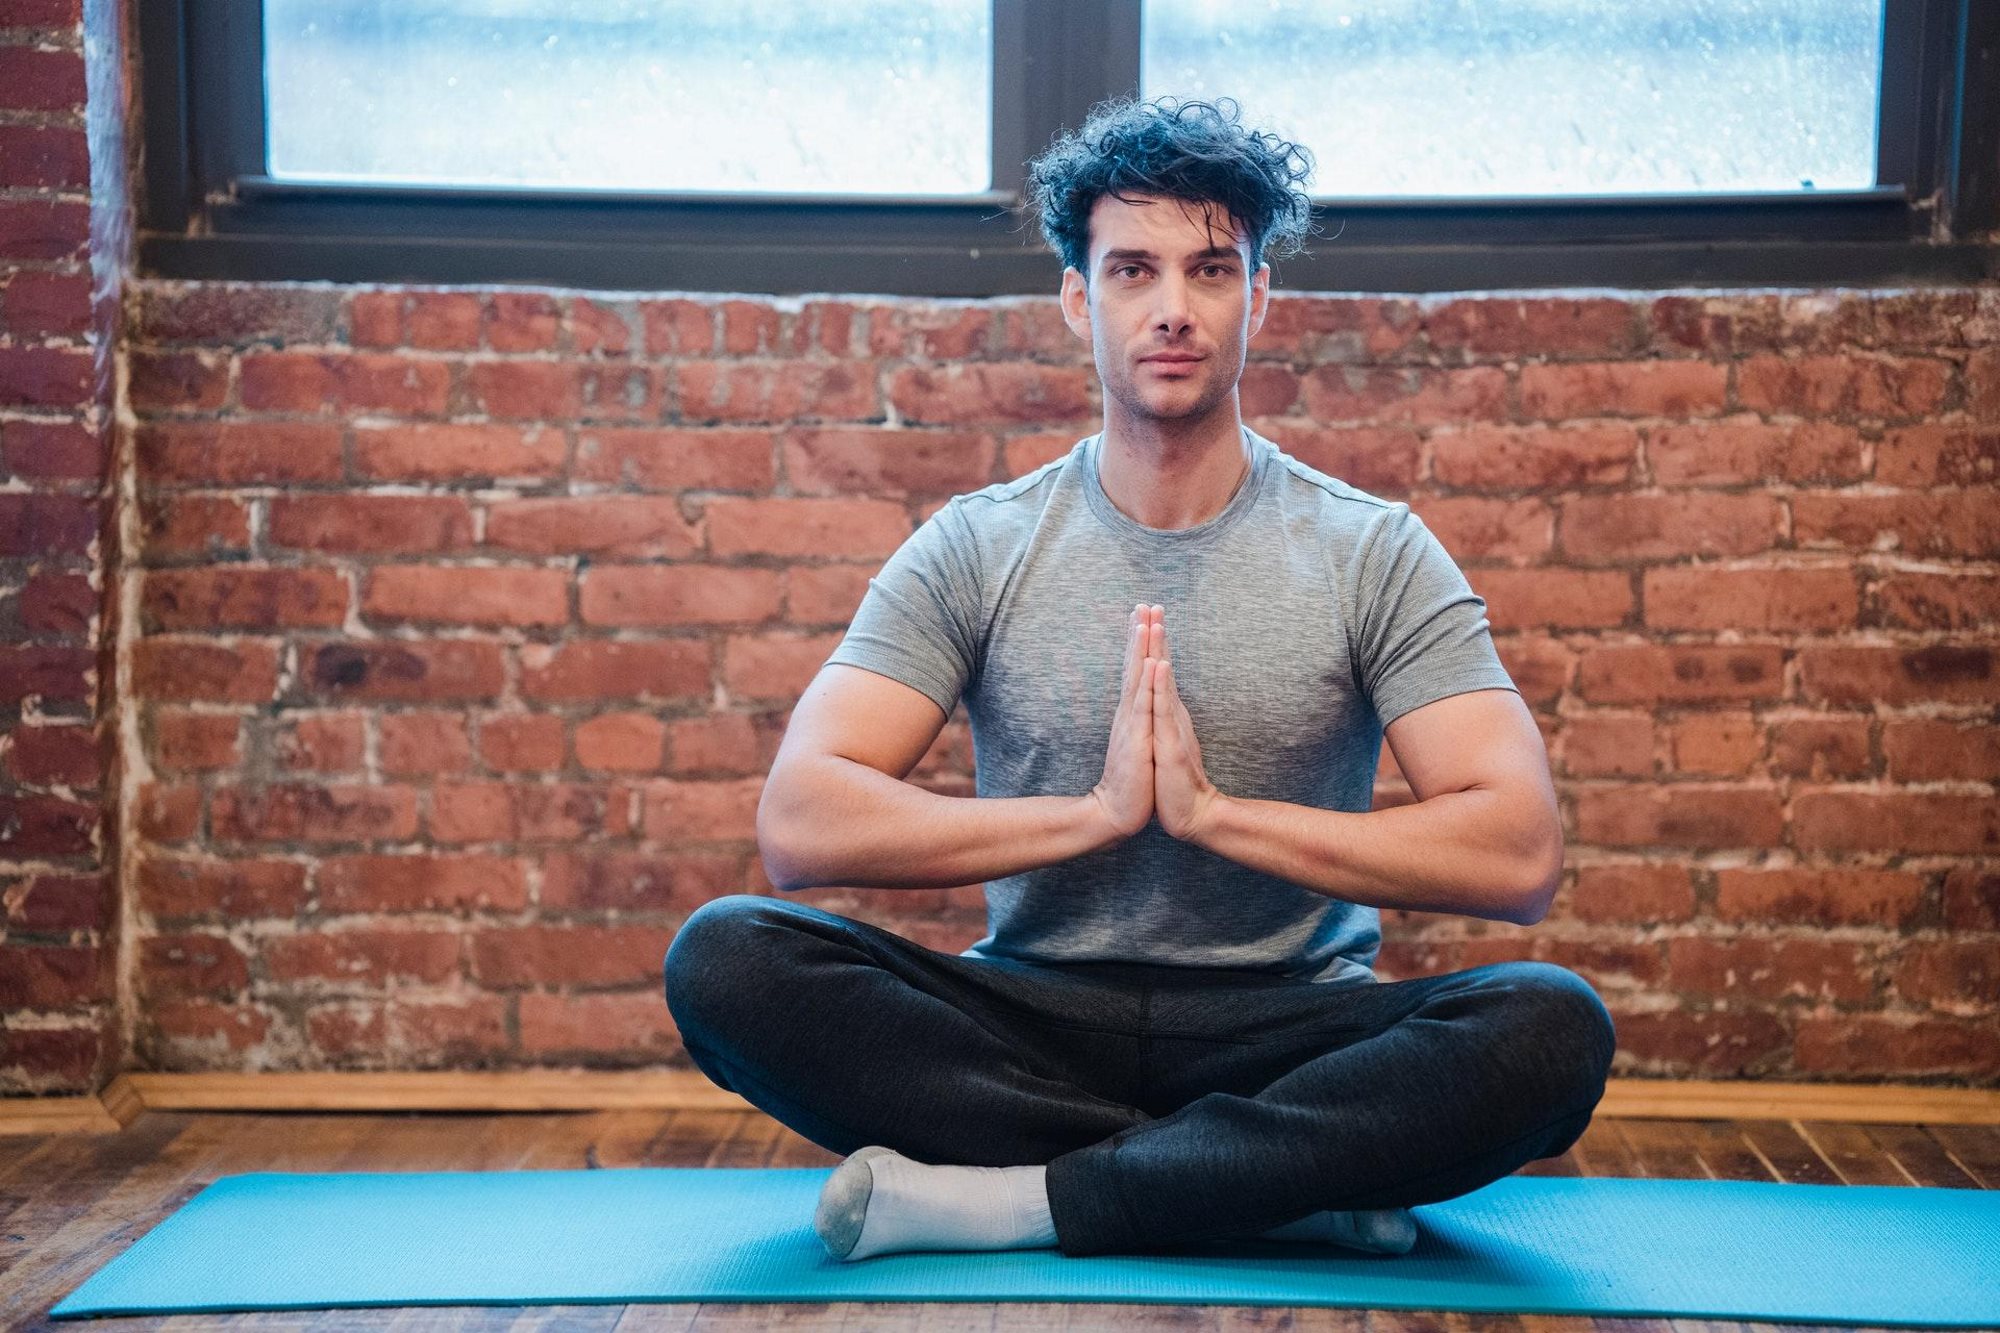 Man practising yoga and meditation - doing a yoga pose and meditating.